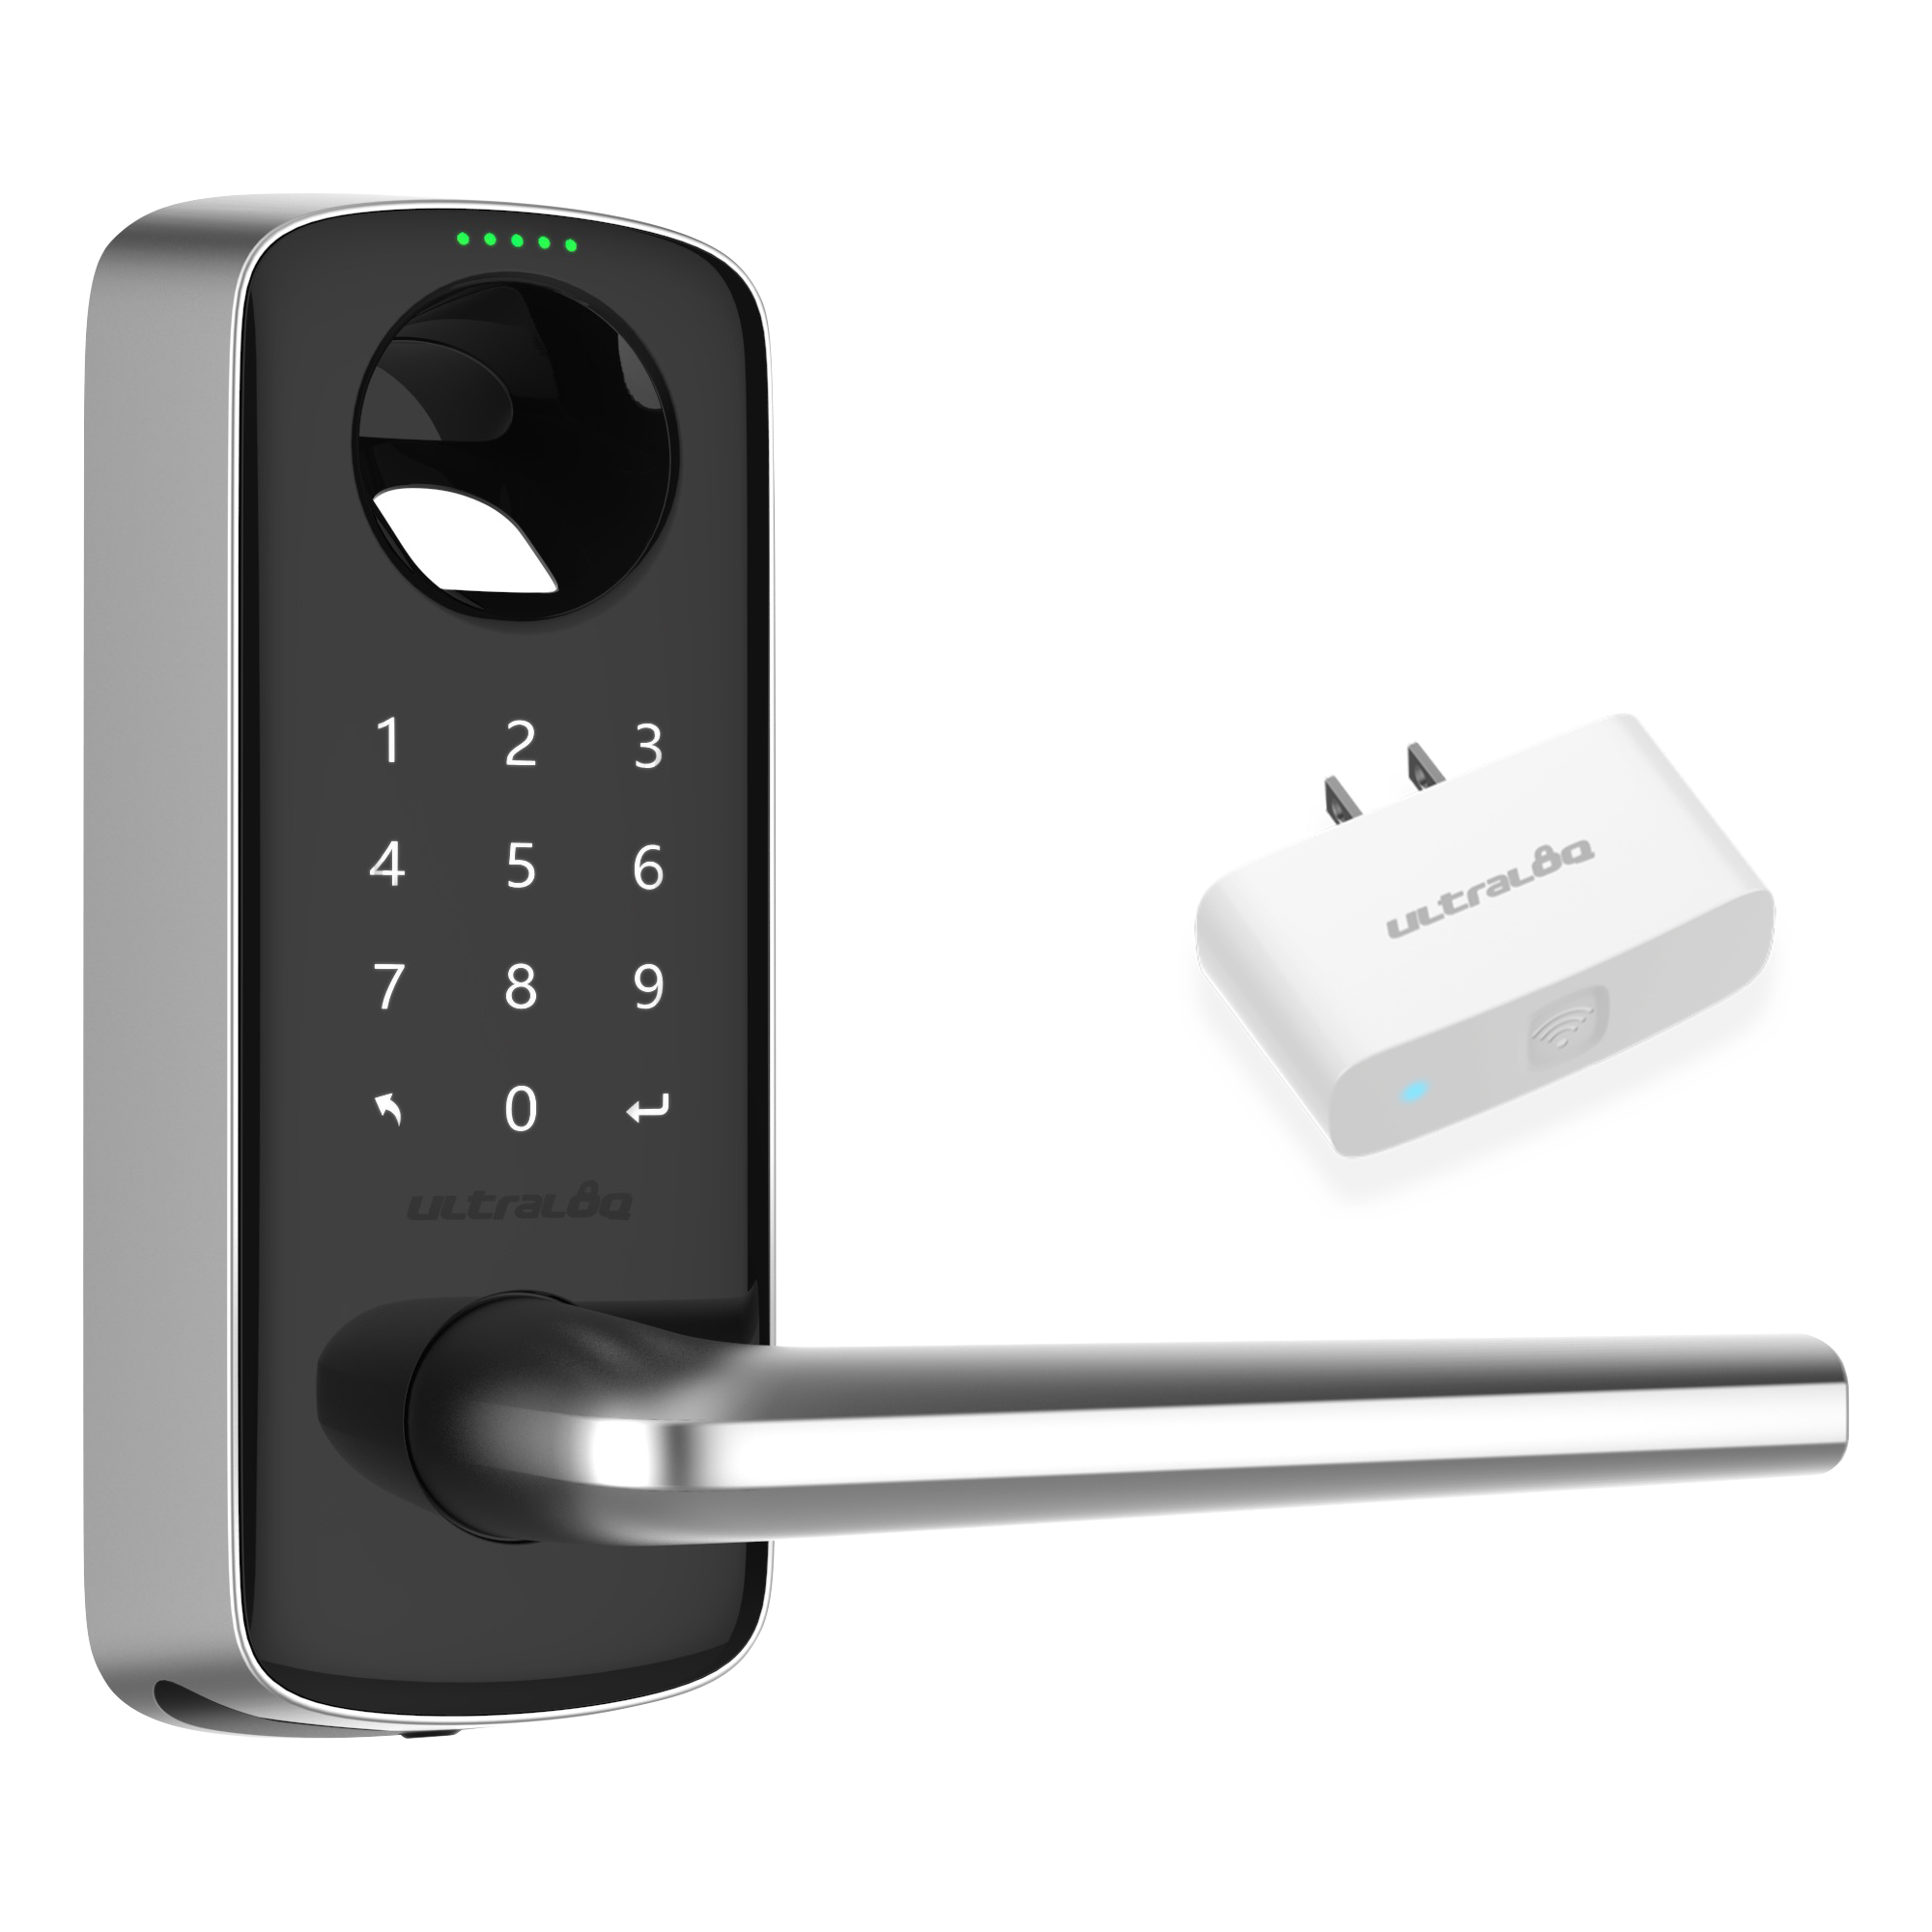 August Wi-Fi Smart Lock - Smart lock - wireless - Bluetooth, 802.11b/g/n -  2.4 Ghz - silver